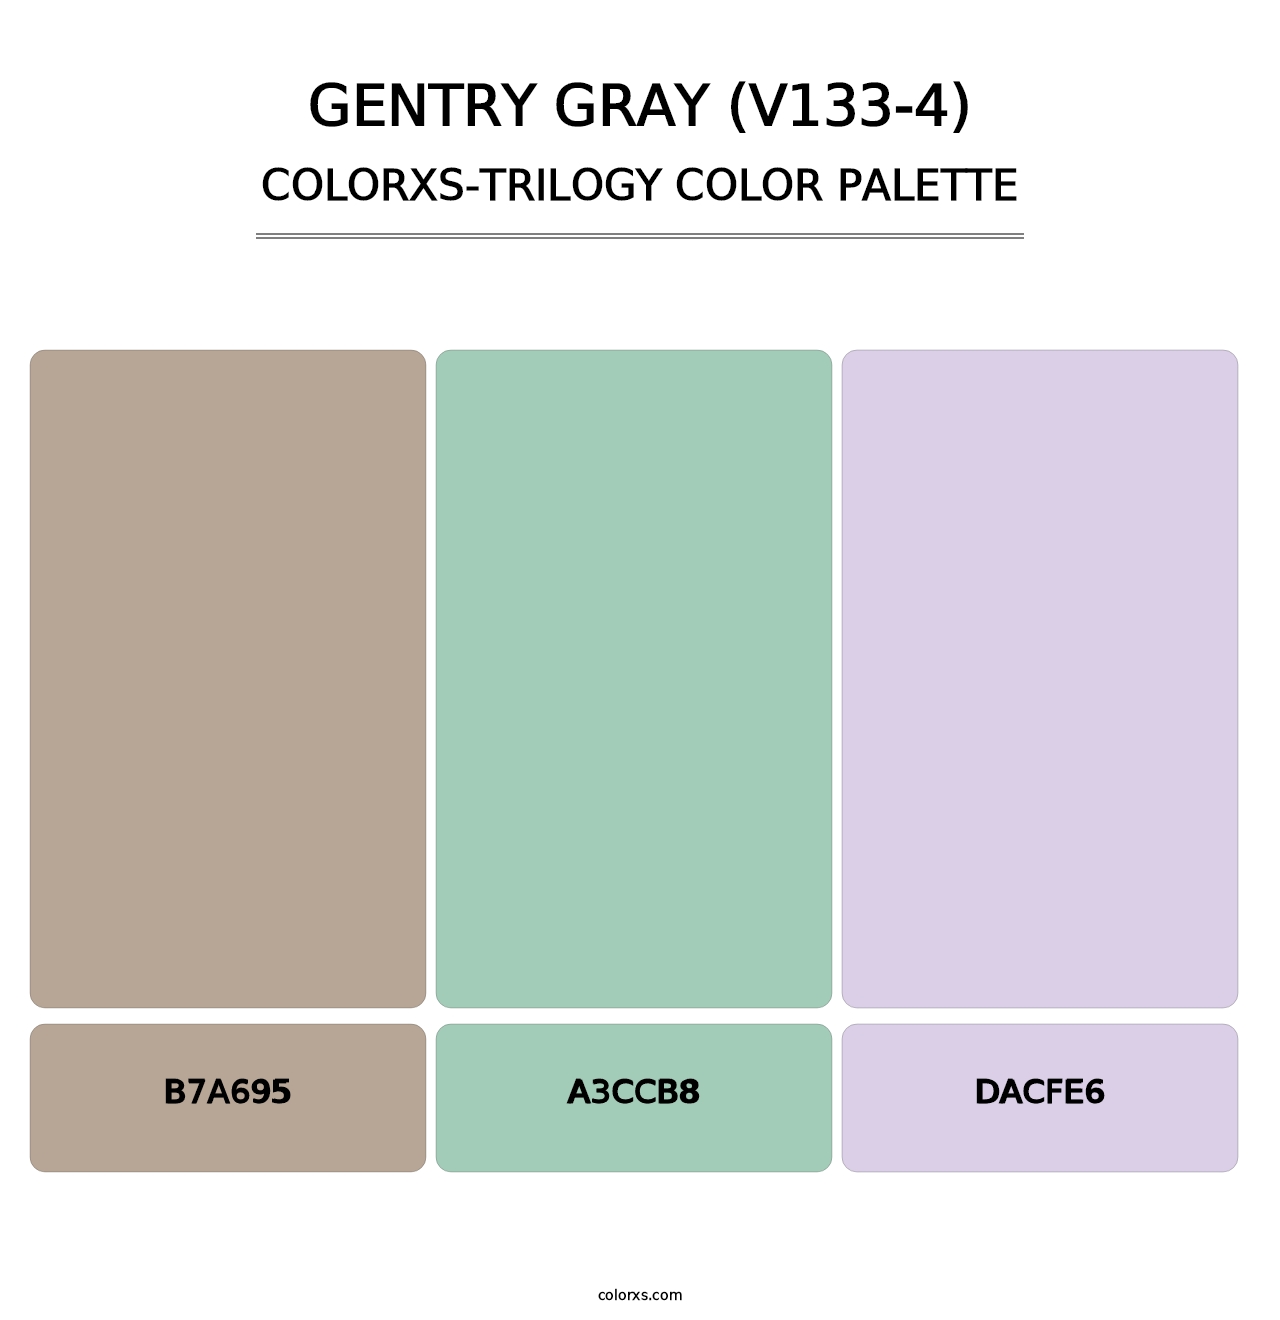 Gentry Gray (V133-4) - Colorxs Trilogy Palette